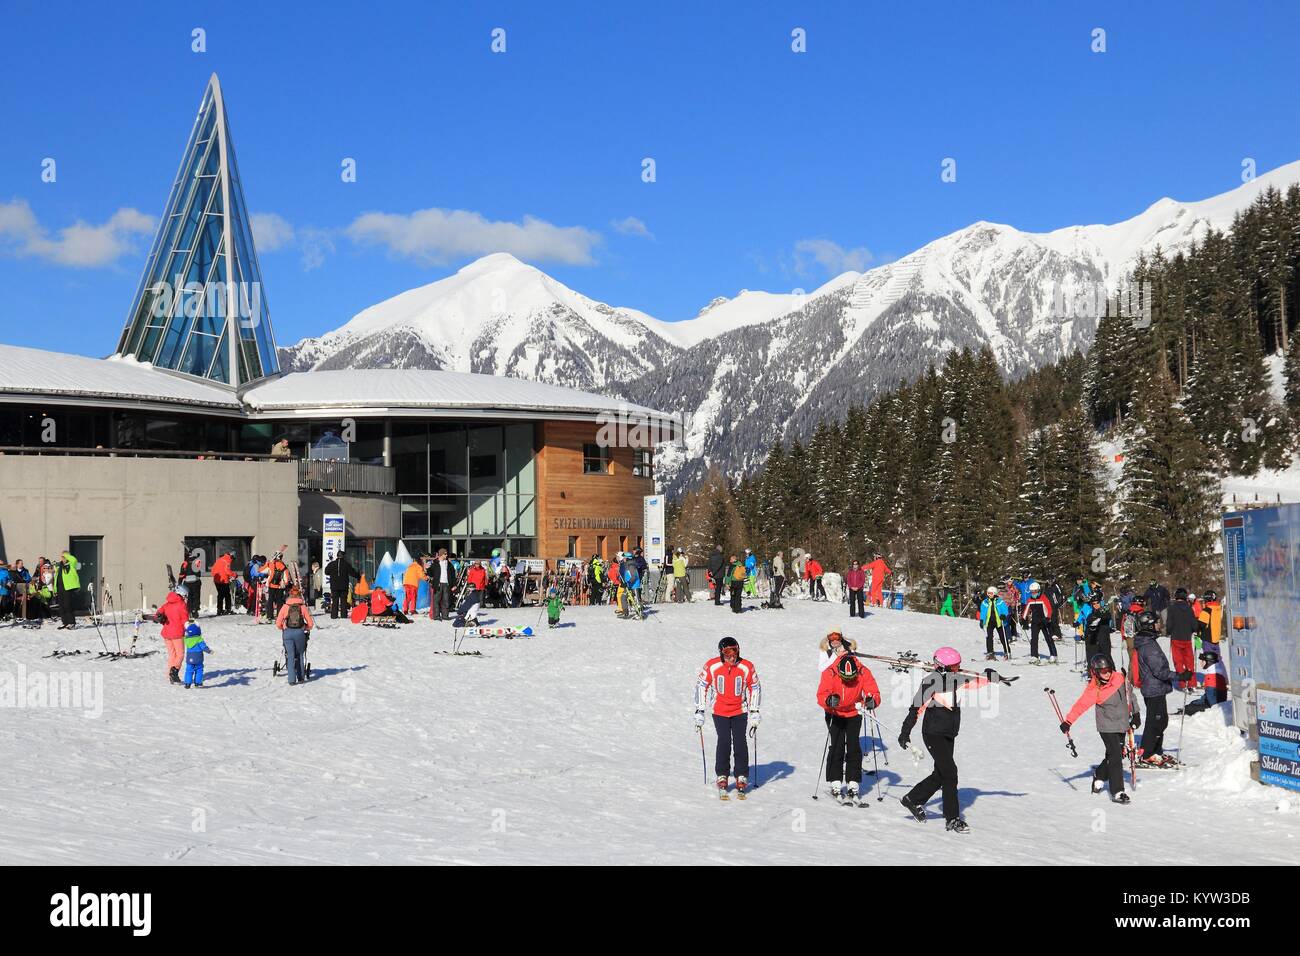 BAD HOFGASTEIN, AUSTRIA - MARCH 9, 2016: People visit Angertal ski station in Bad Hofgastein. It is part of Ski Amade, one of largest ski regions in E Stock Photo